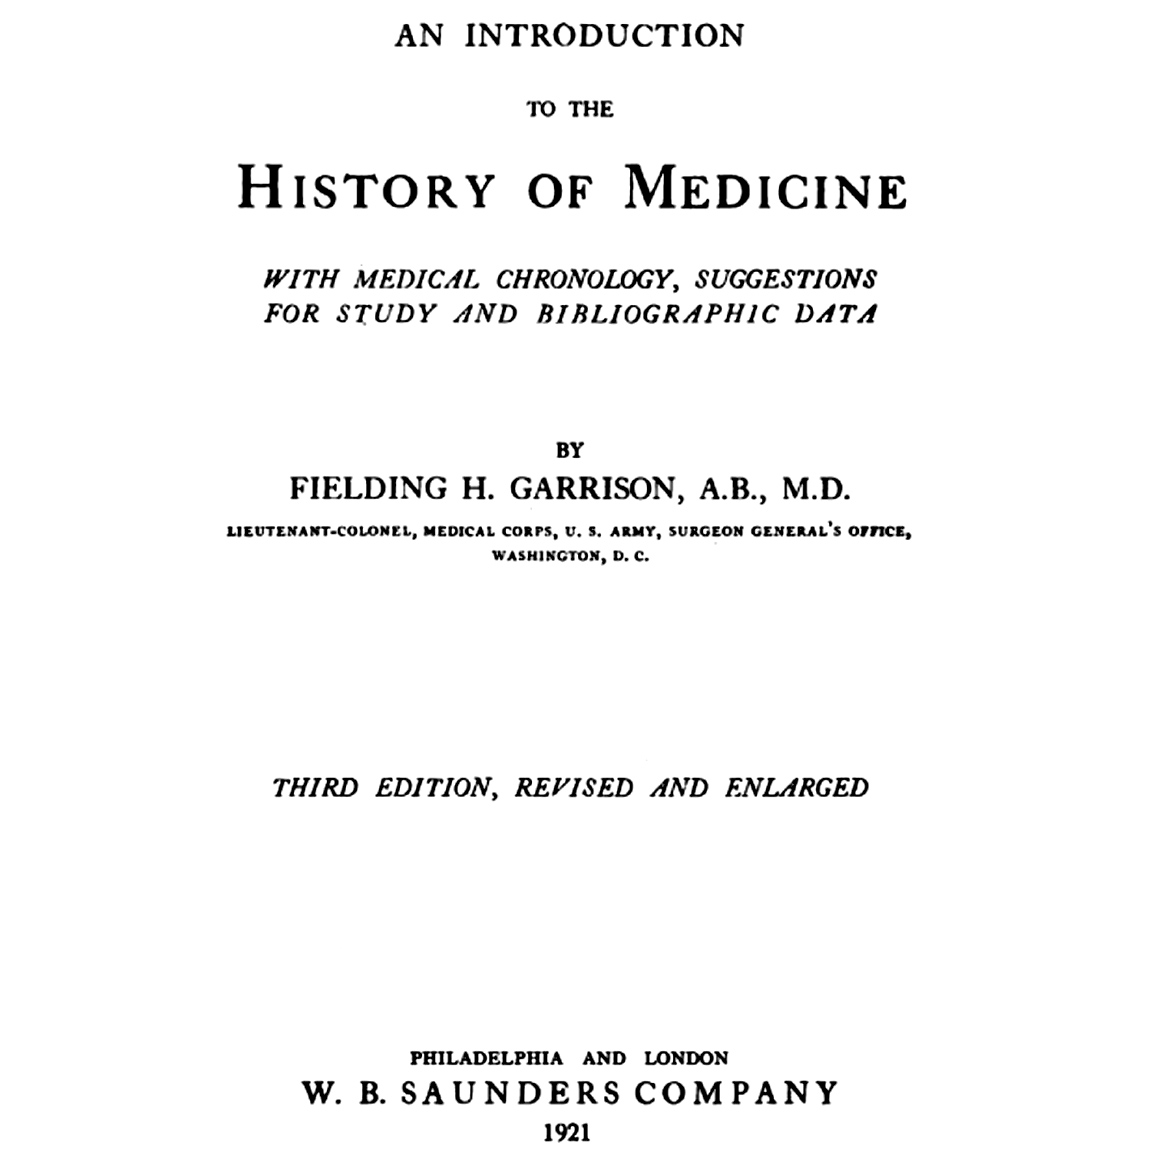 1921-GARRISON-HISTORY-MEDICINE-3rd Ed-title